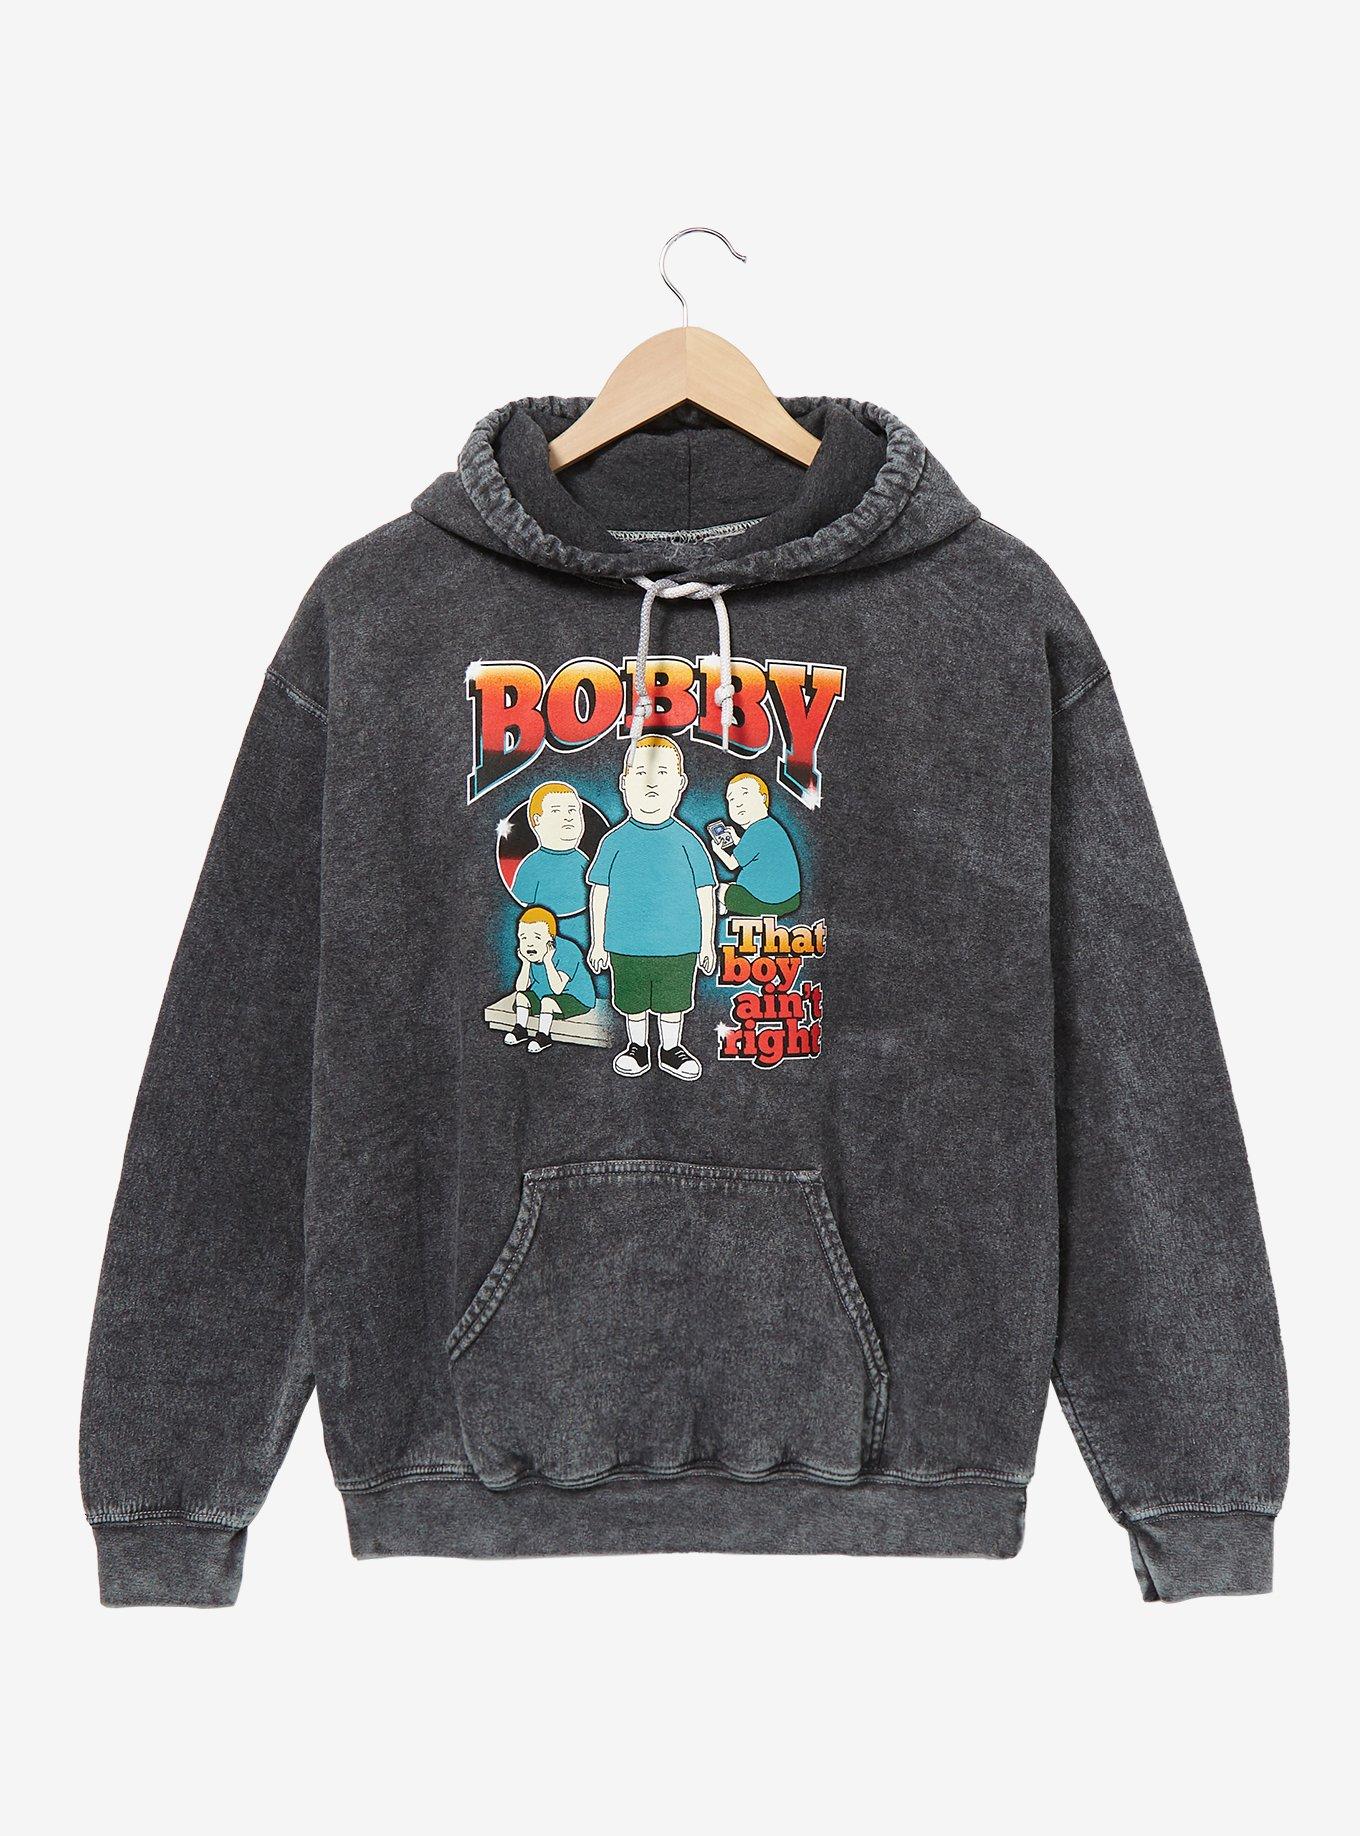 Spirited Away Zip Hoodie Jackets merch, clothing & apparel - Anime Ape